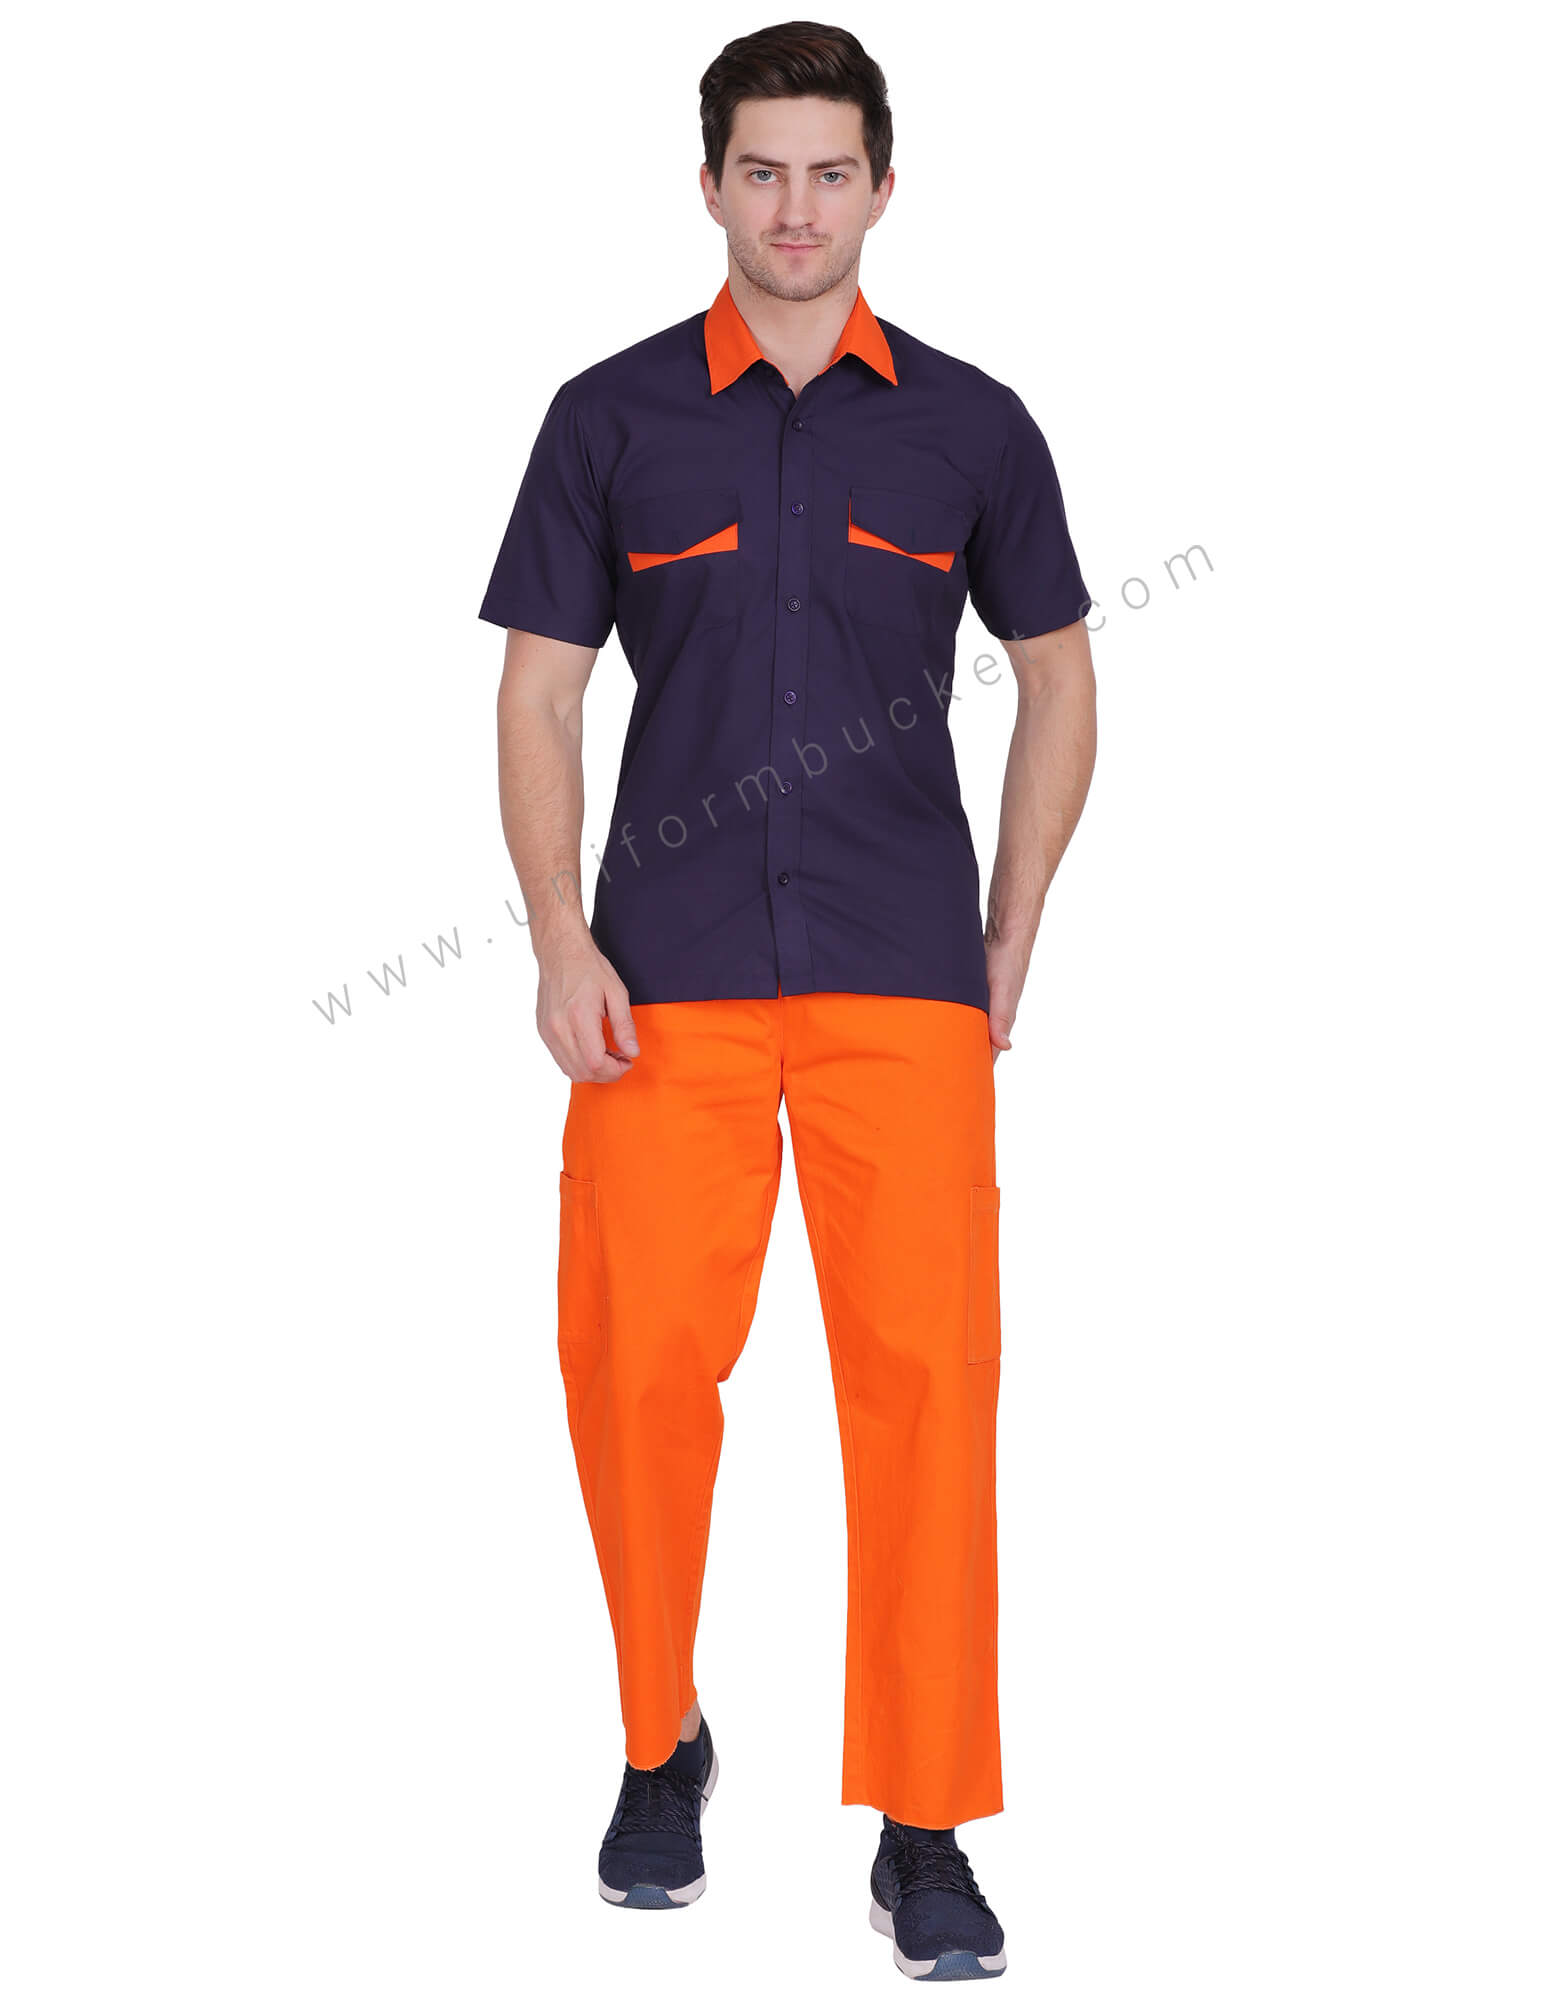 Orange And Black Men Housekeeping Uniform T Shirt, For Hospital